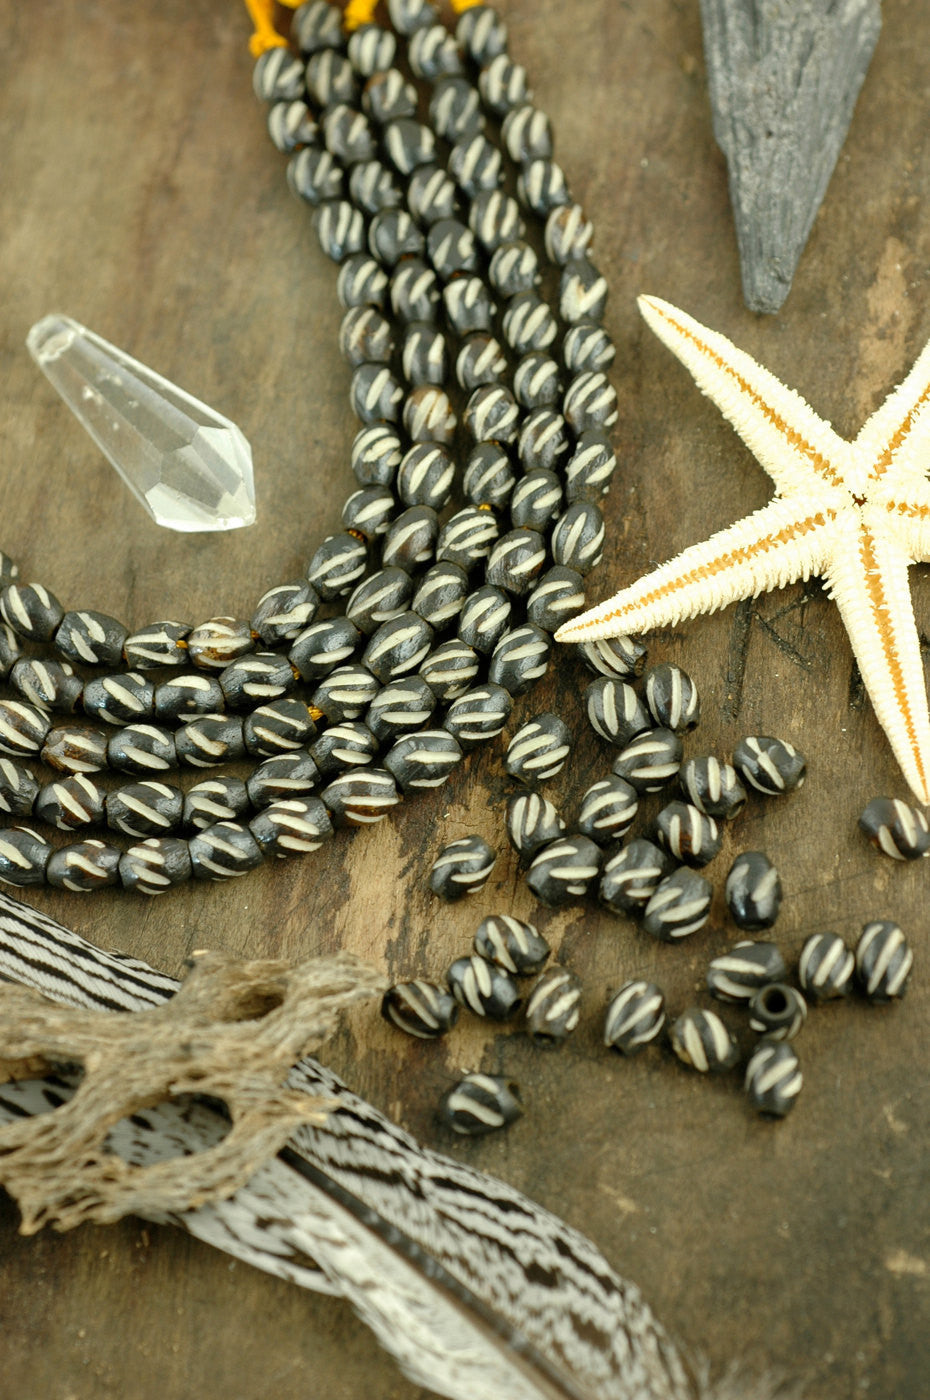 Hand Carved Spiral Stripes: Brown/White Bone Beads, 5x6mm, 28 pieces - ShopWomanShopsWorld.com. Bone Beads, Tassels, Pom Poms, African Beads.